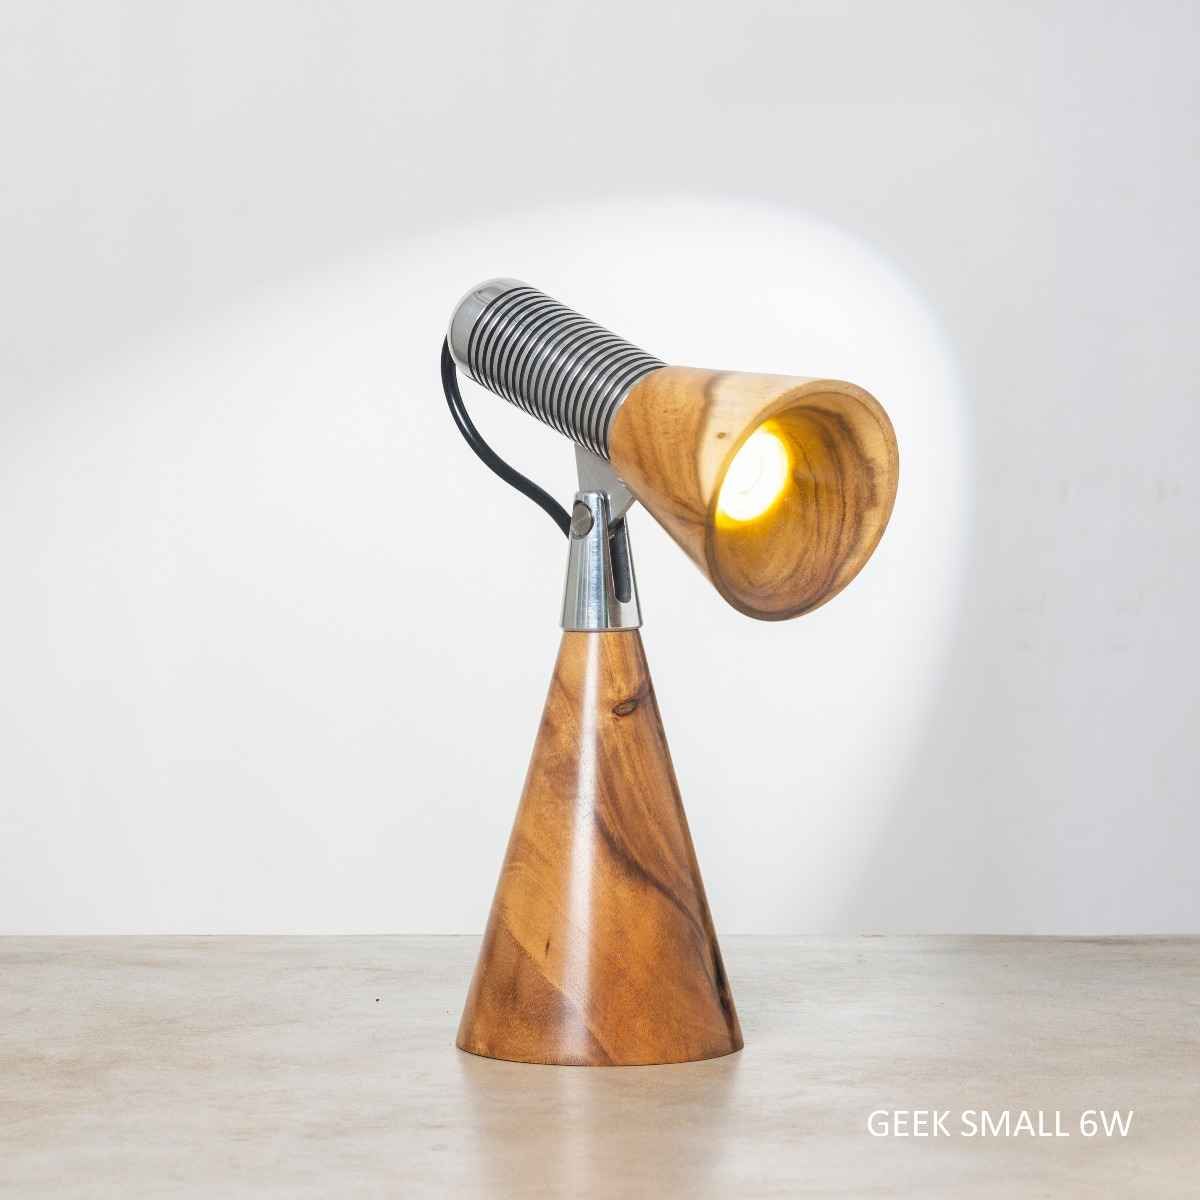 Geek S 6W Table Lamp